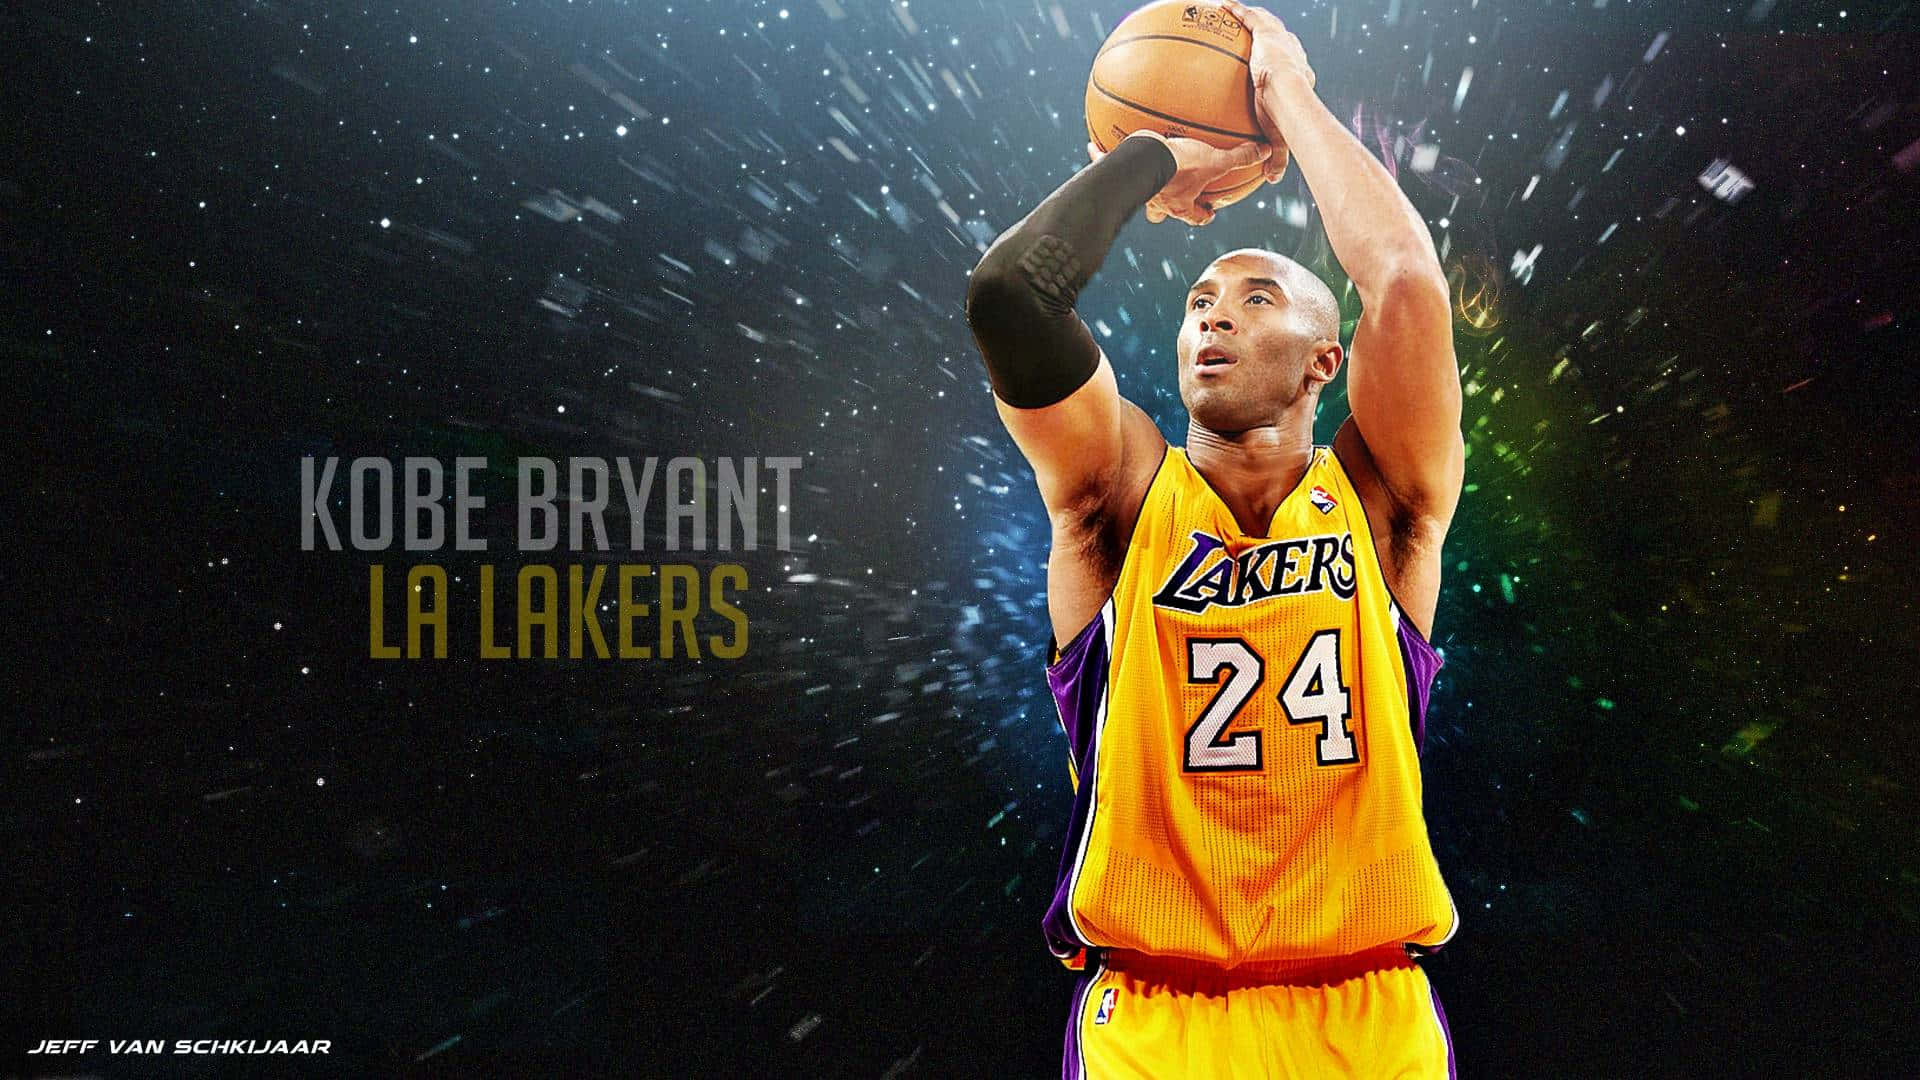 Kobe Bryant, an iconic champion and legendary basketball player